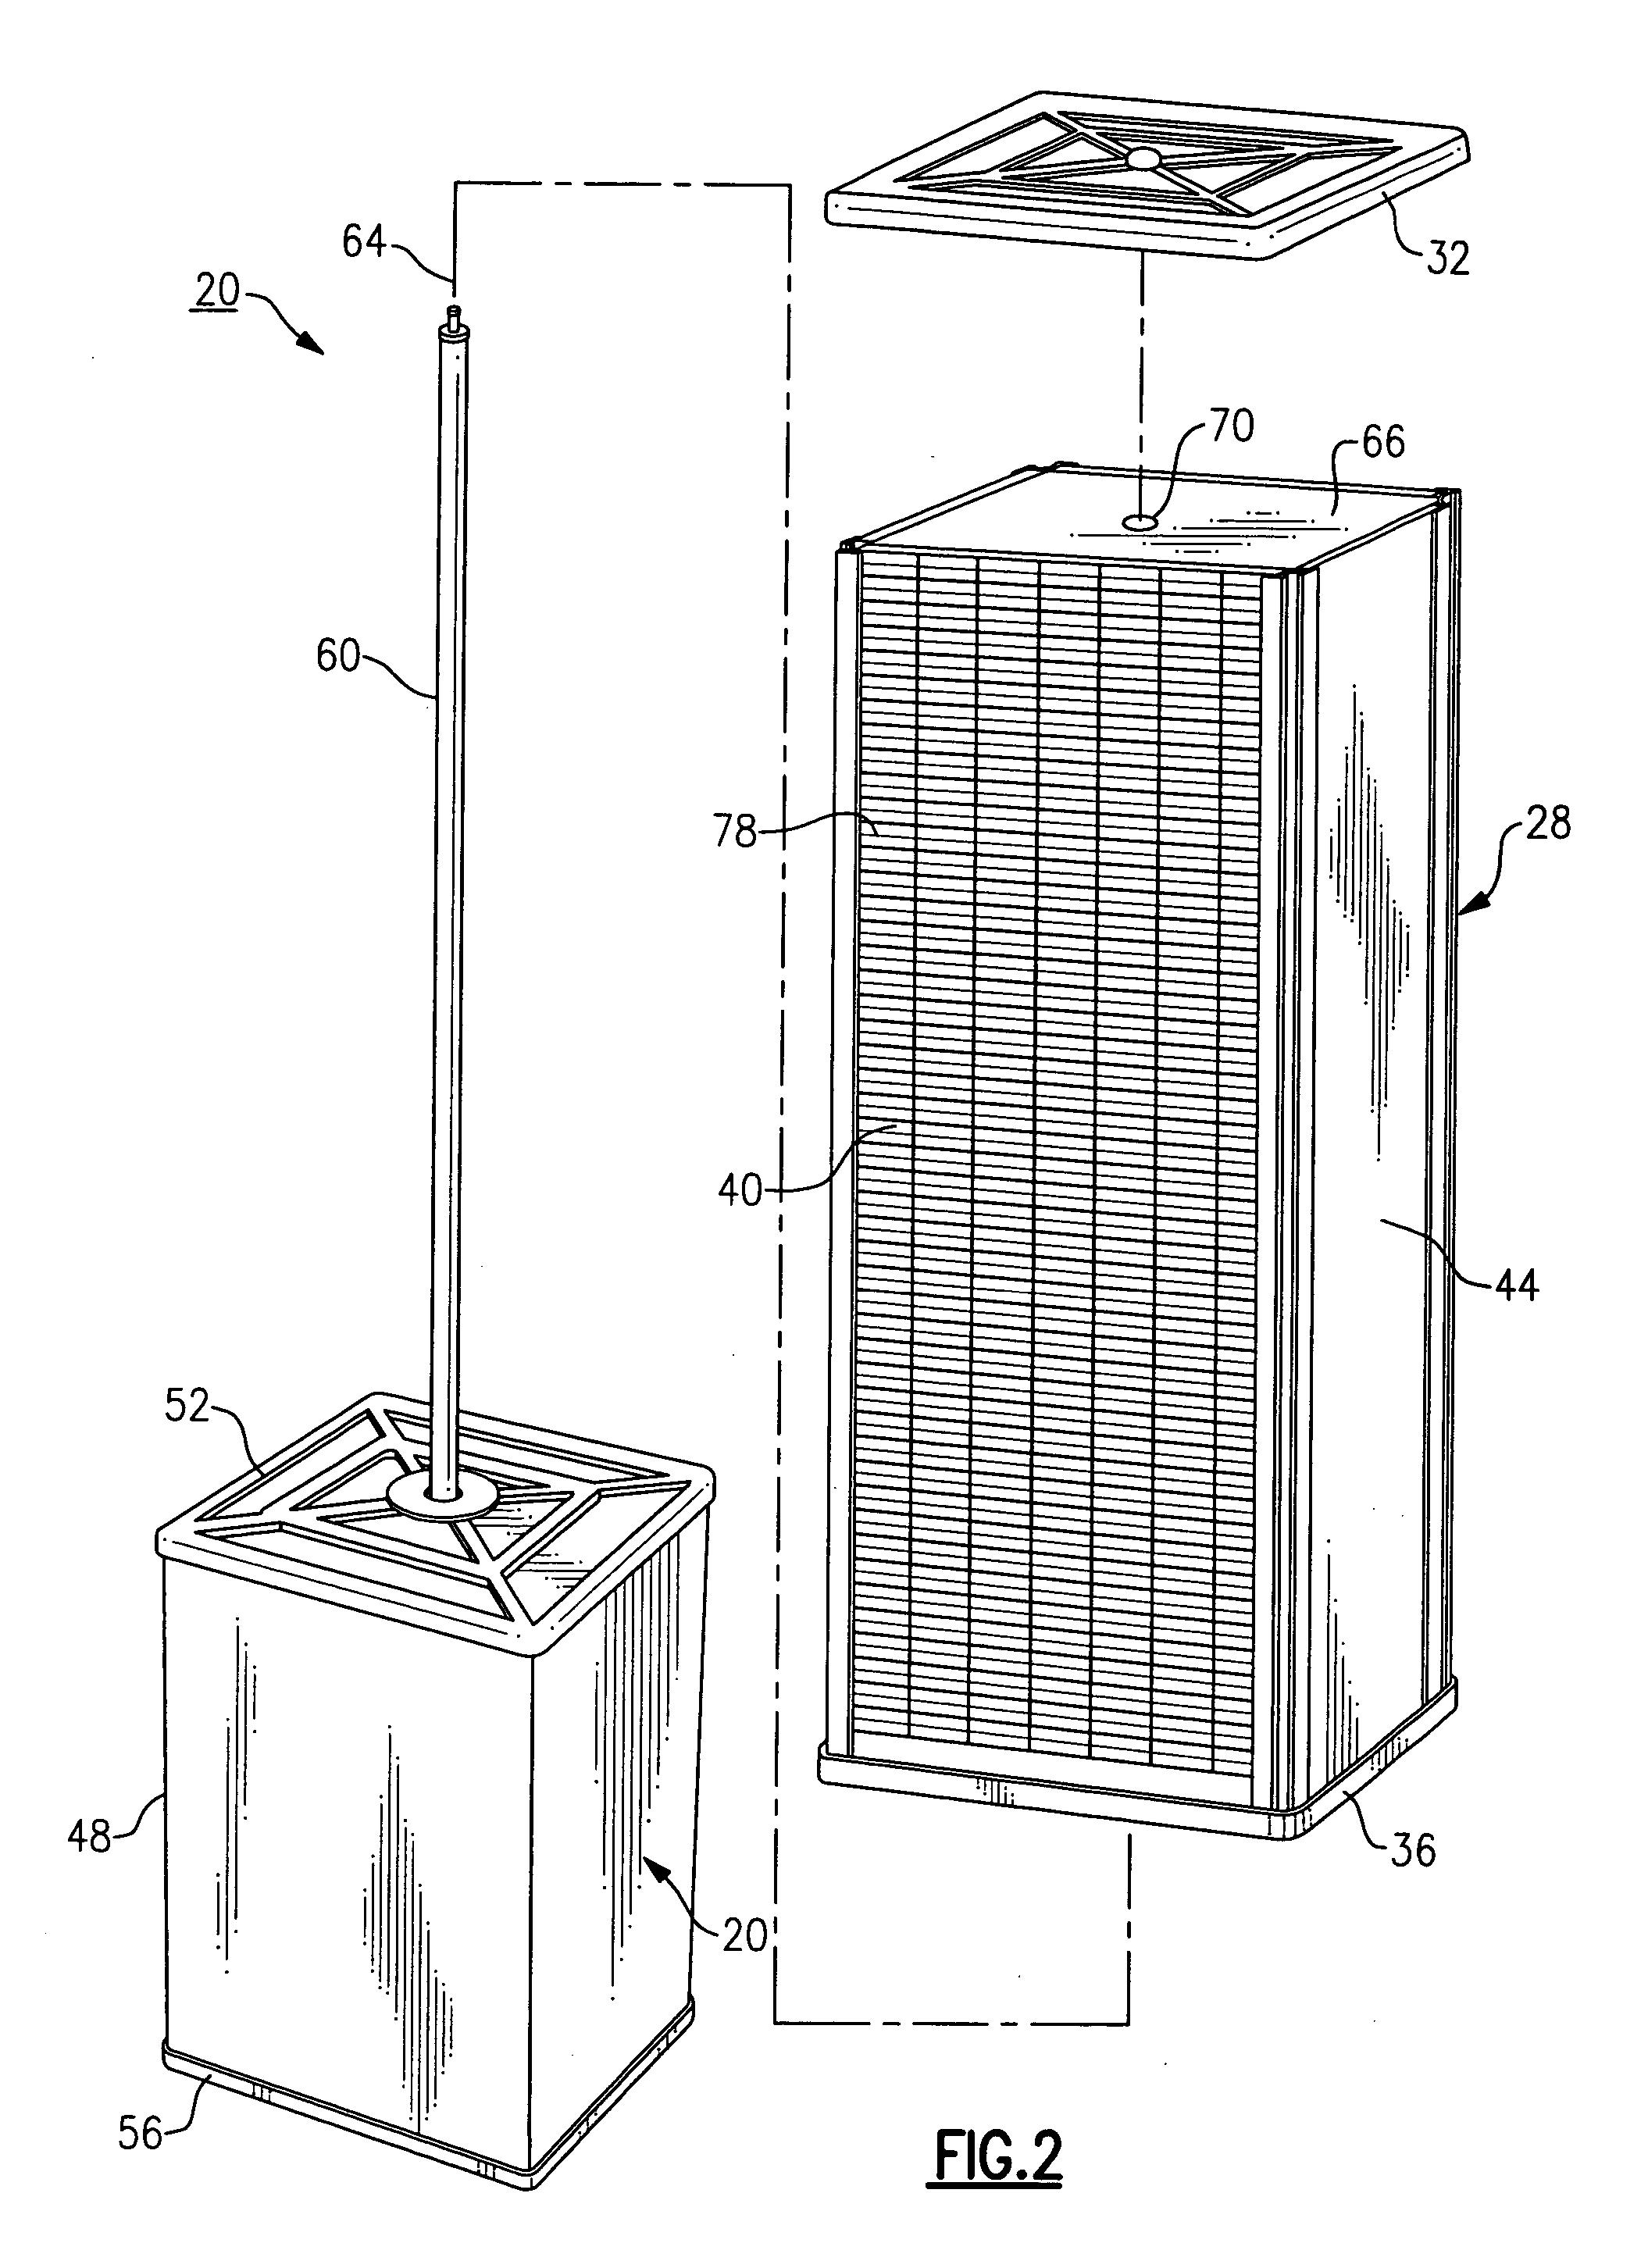 Rotatable display apparatus